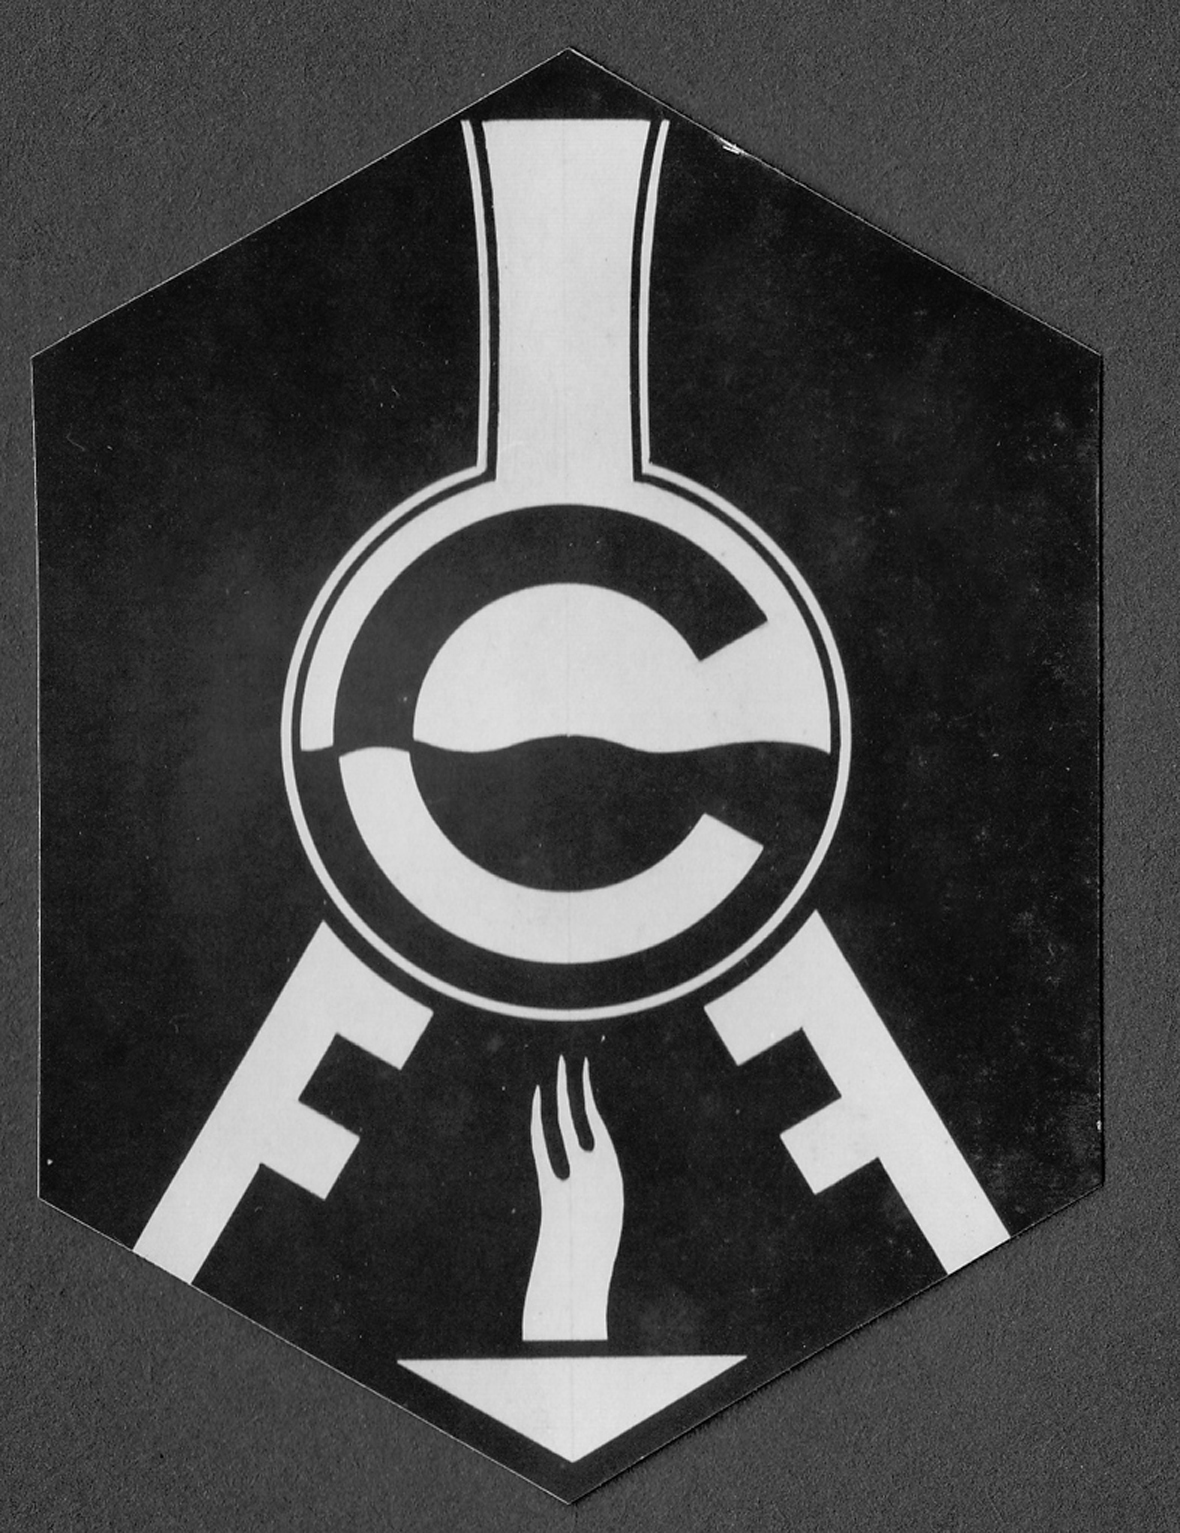 CFF-Logo